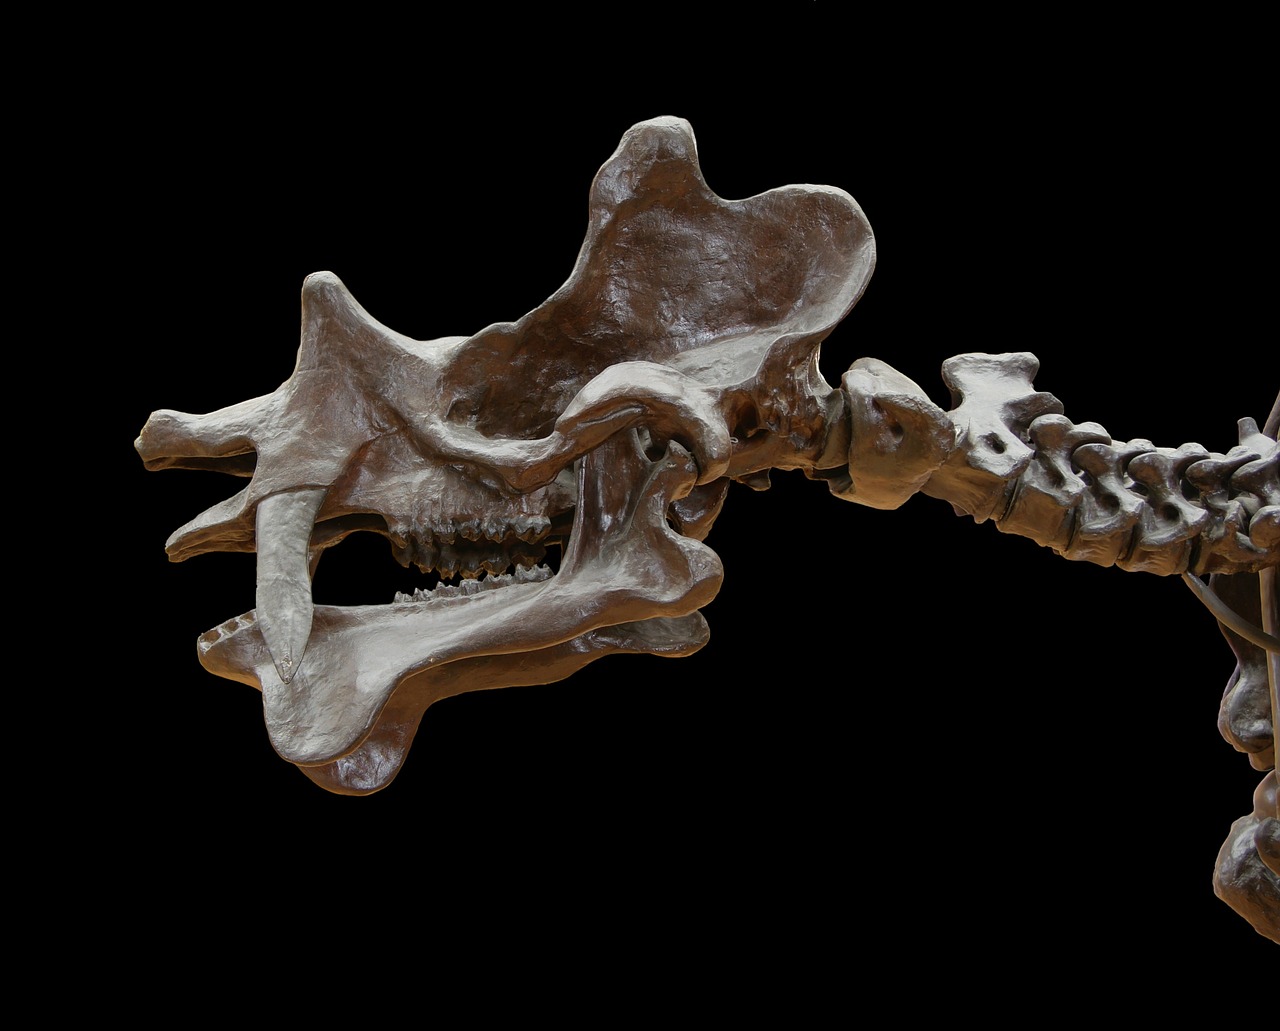 uintatherium skull skeleton free photo